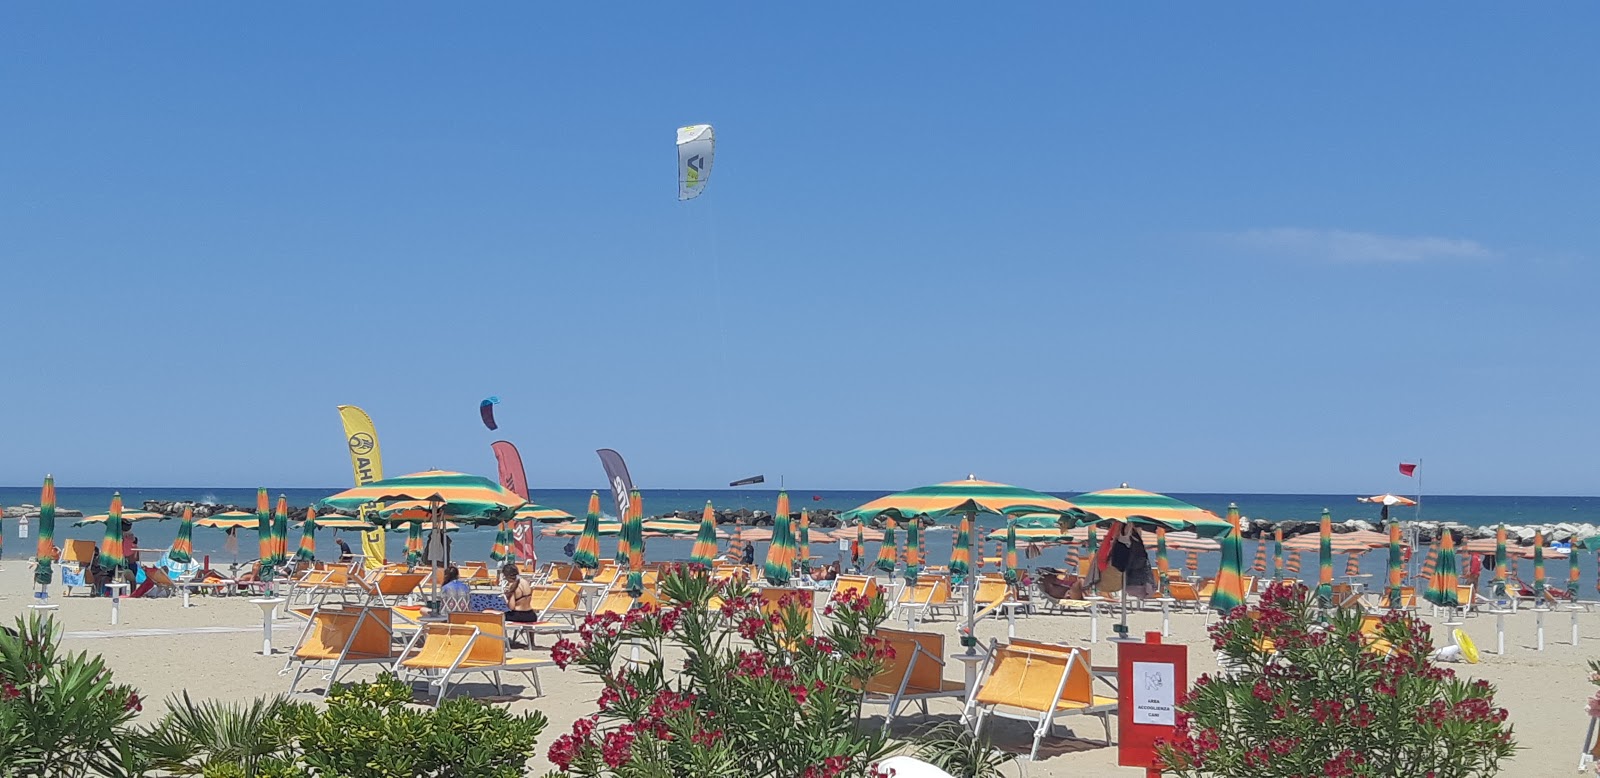 Spiaggia di Cattolica II'in fotoğrafı geniş ile birlikte